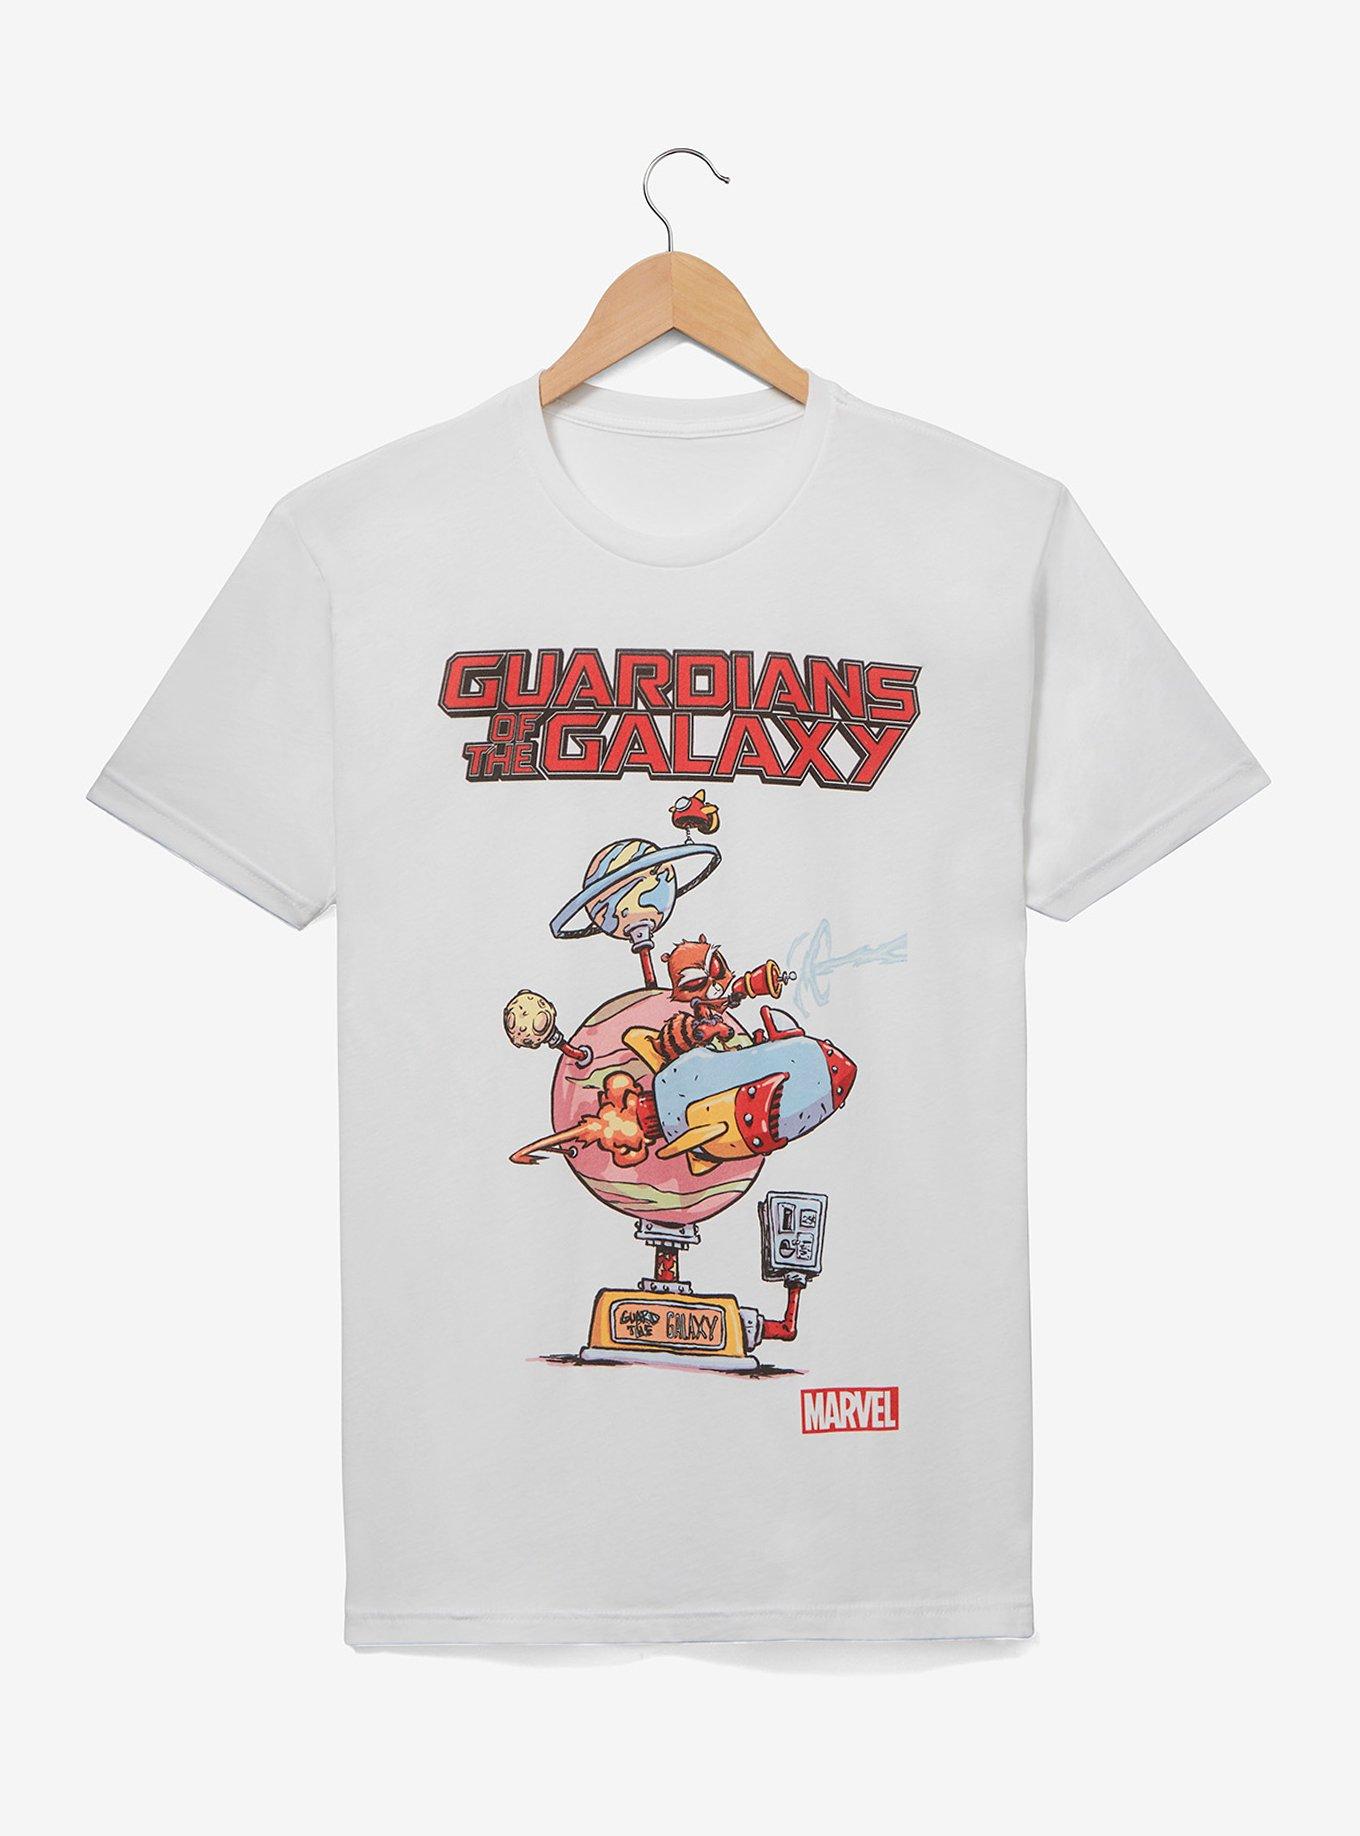 Marvel Guardians of the Galaxy Rocket Raccoon Ride T-Shirt